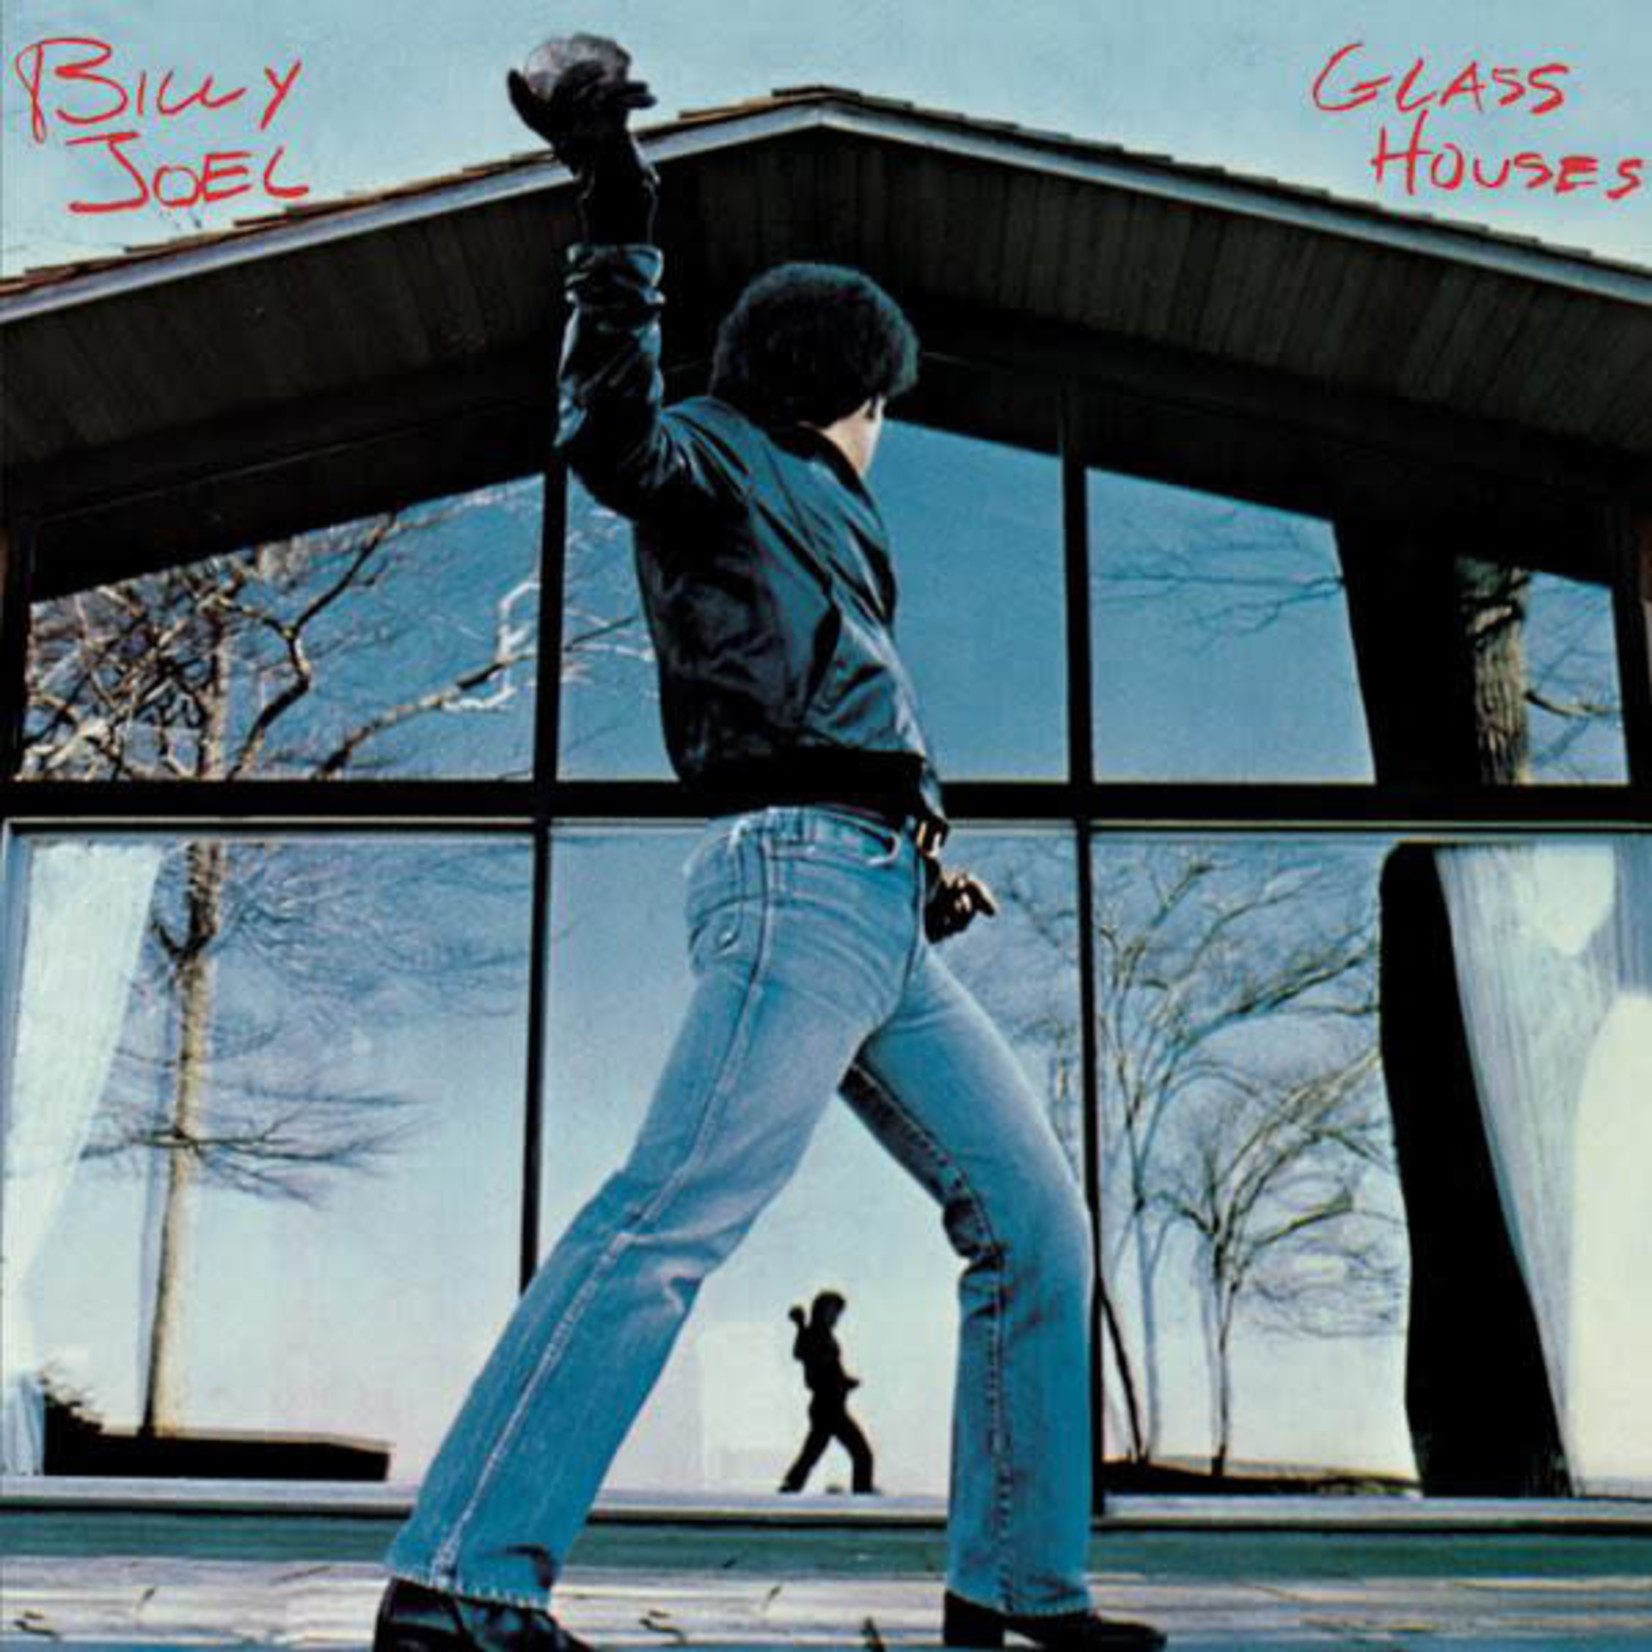 [Vintage] Billy Joel - Glass Houses